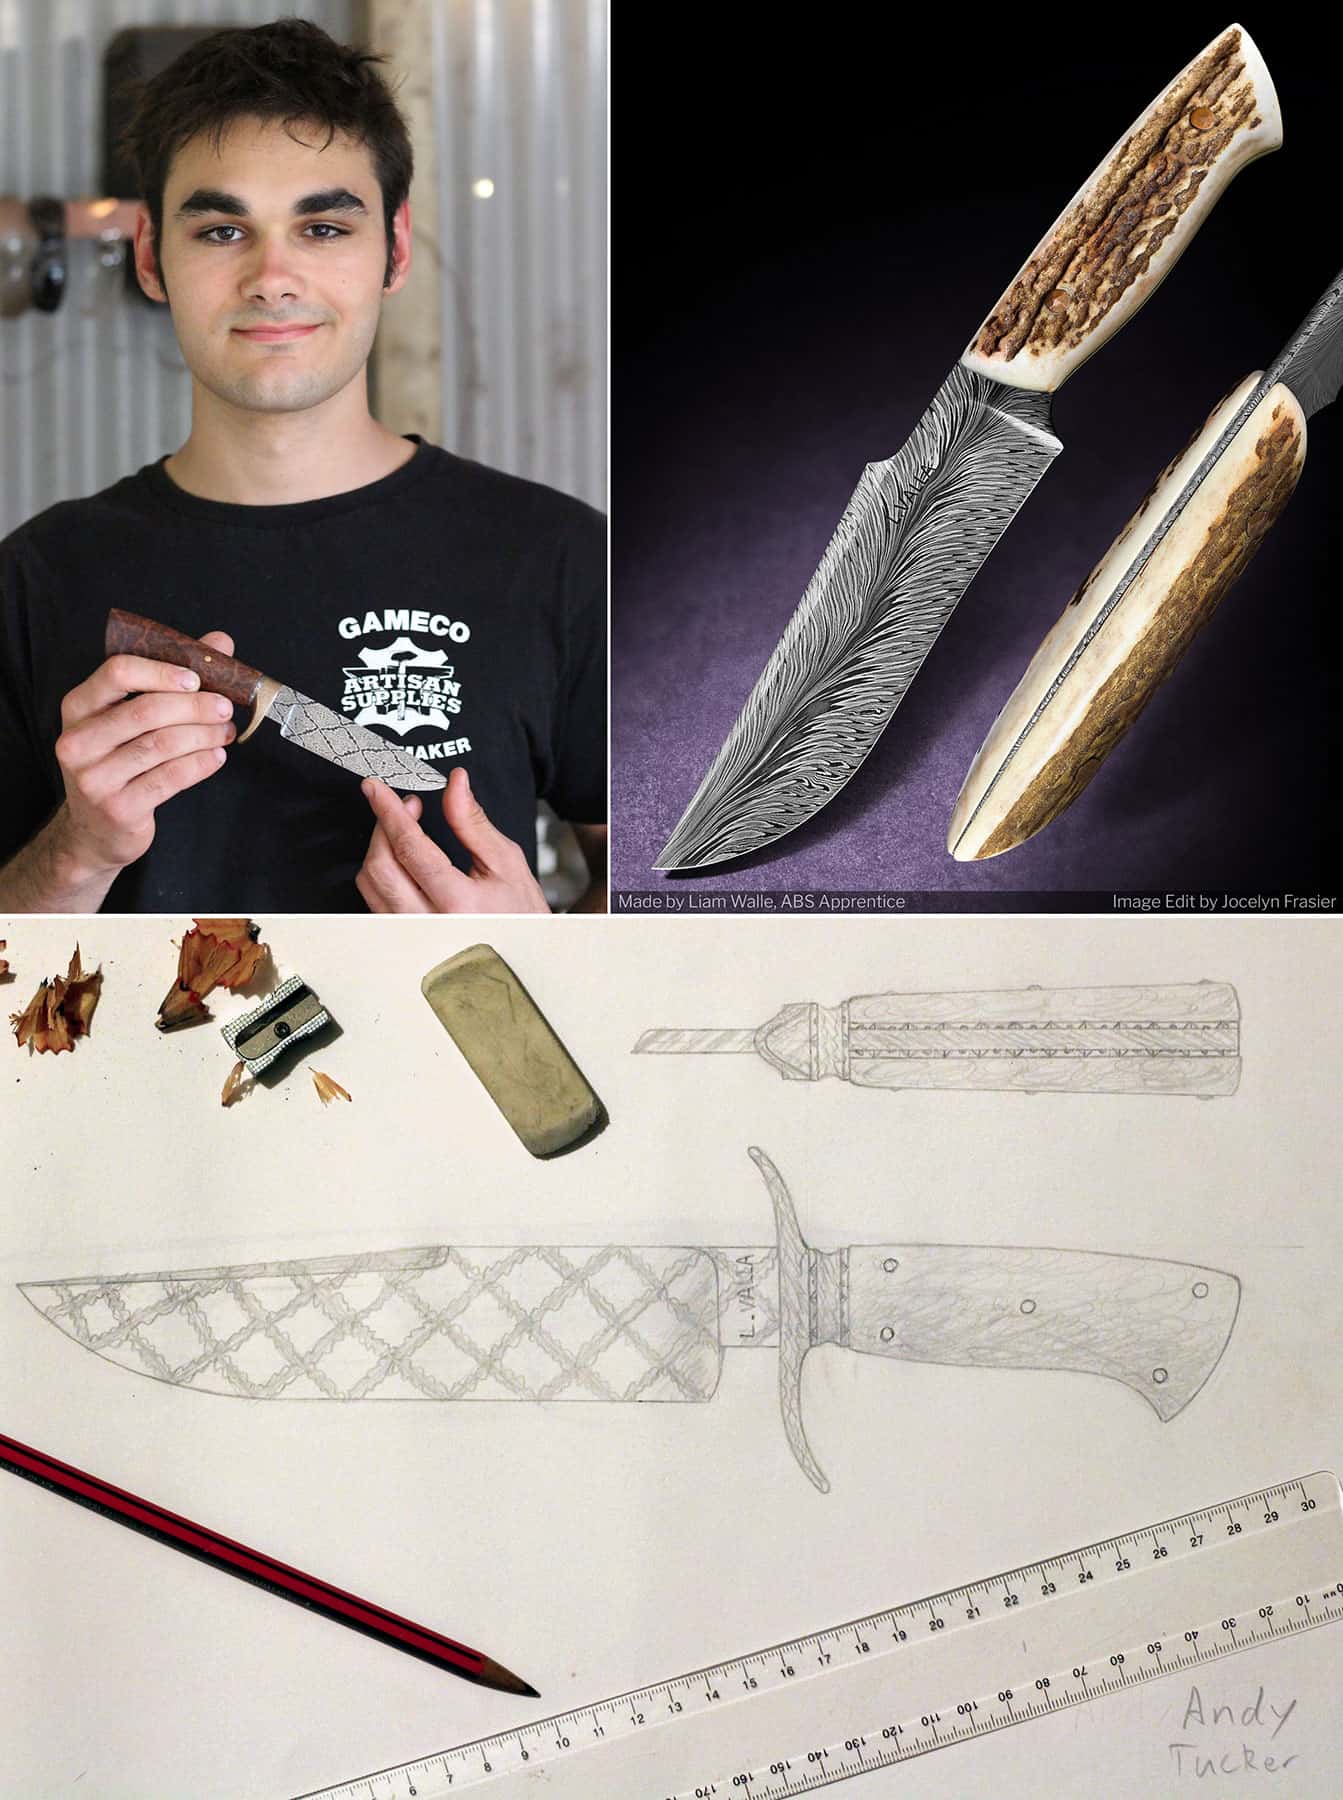 New Zealand custom knifemaker , Liam Walle has skill far beyond his years.